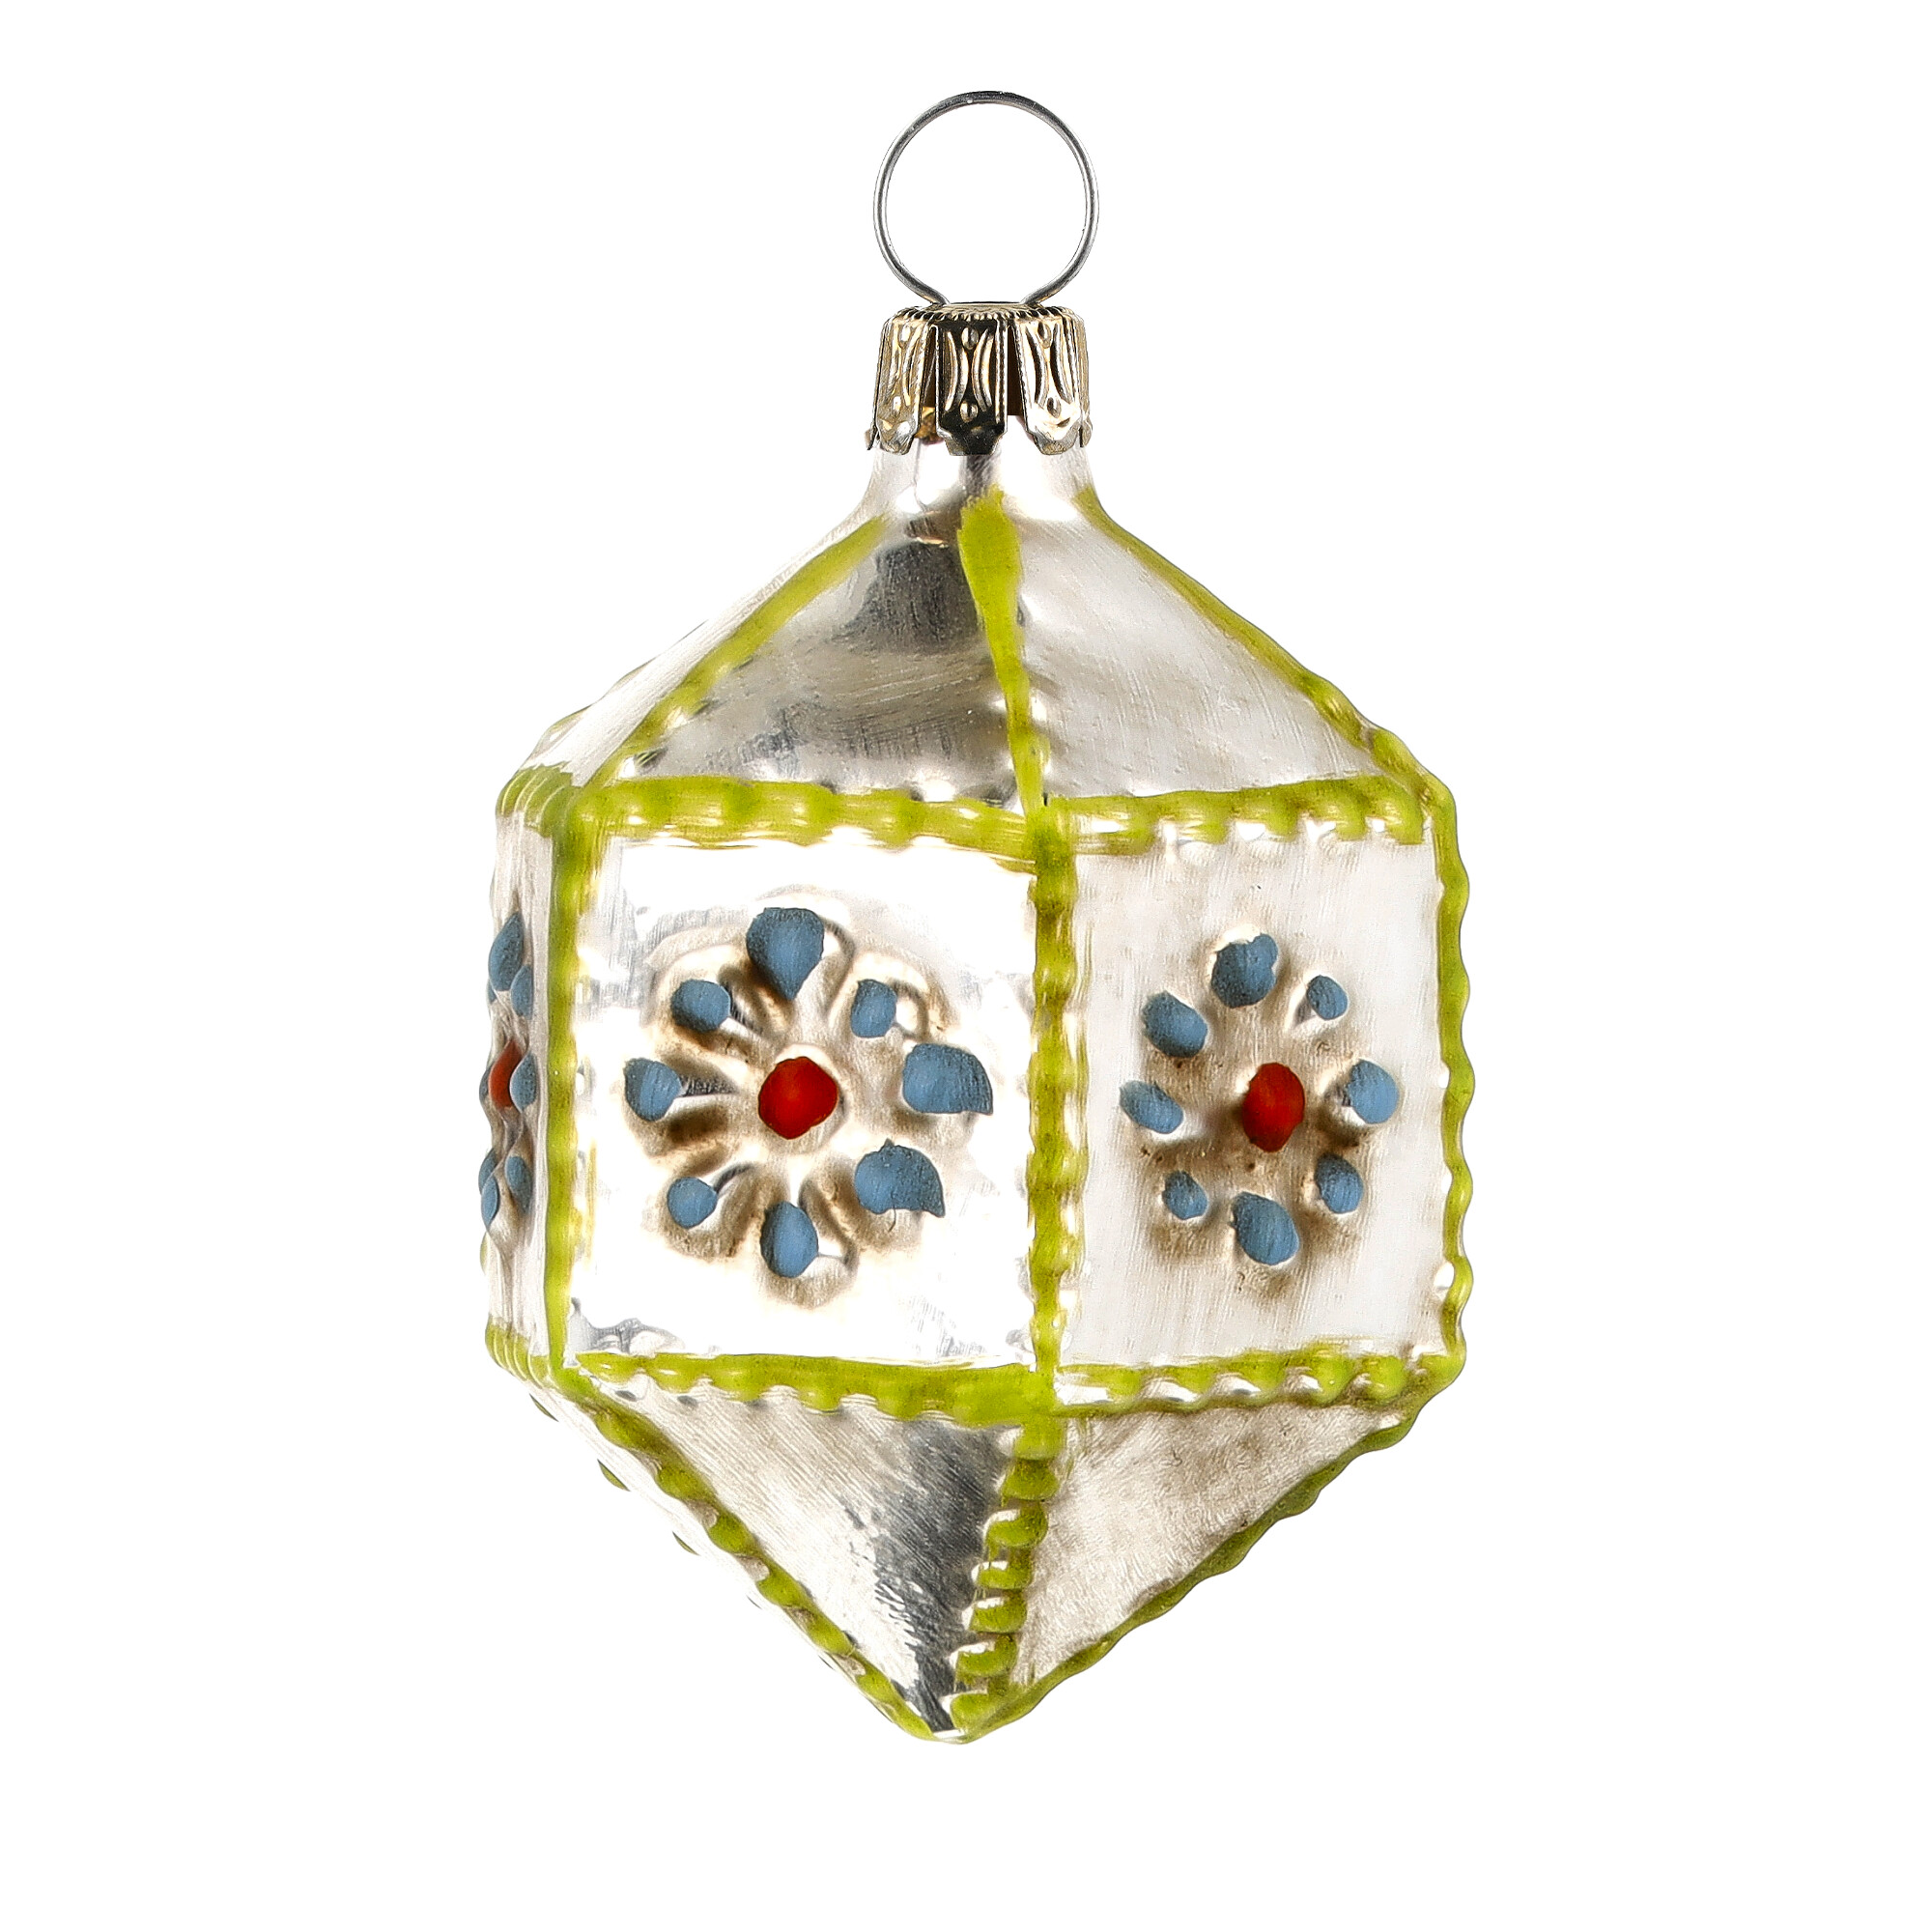 Retro Vintage style Christmas Glass Ornament - Hexagon with knobs